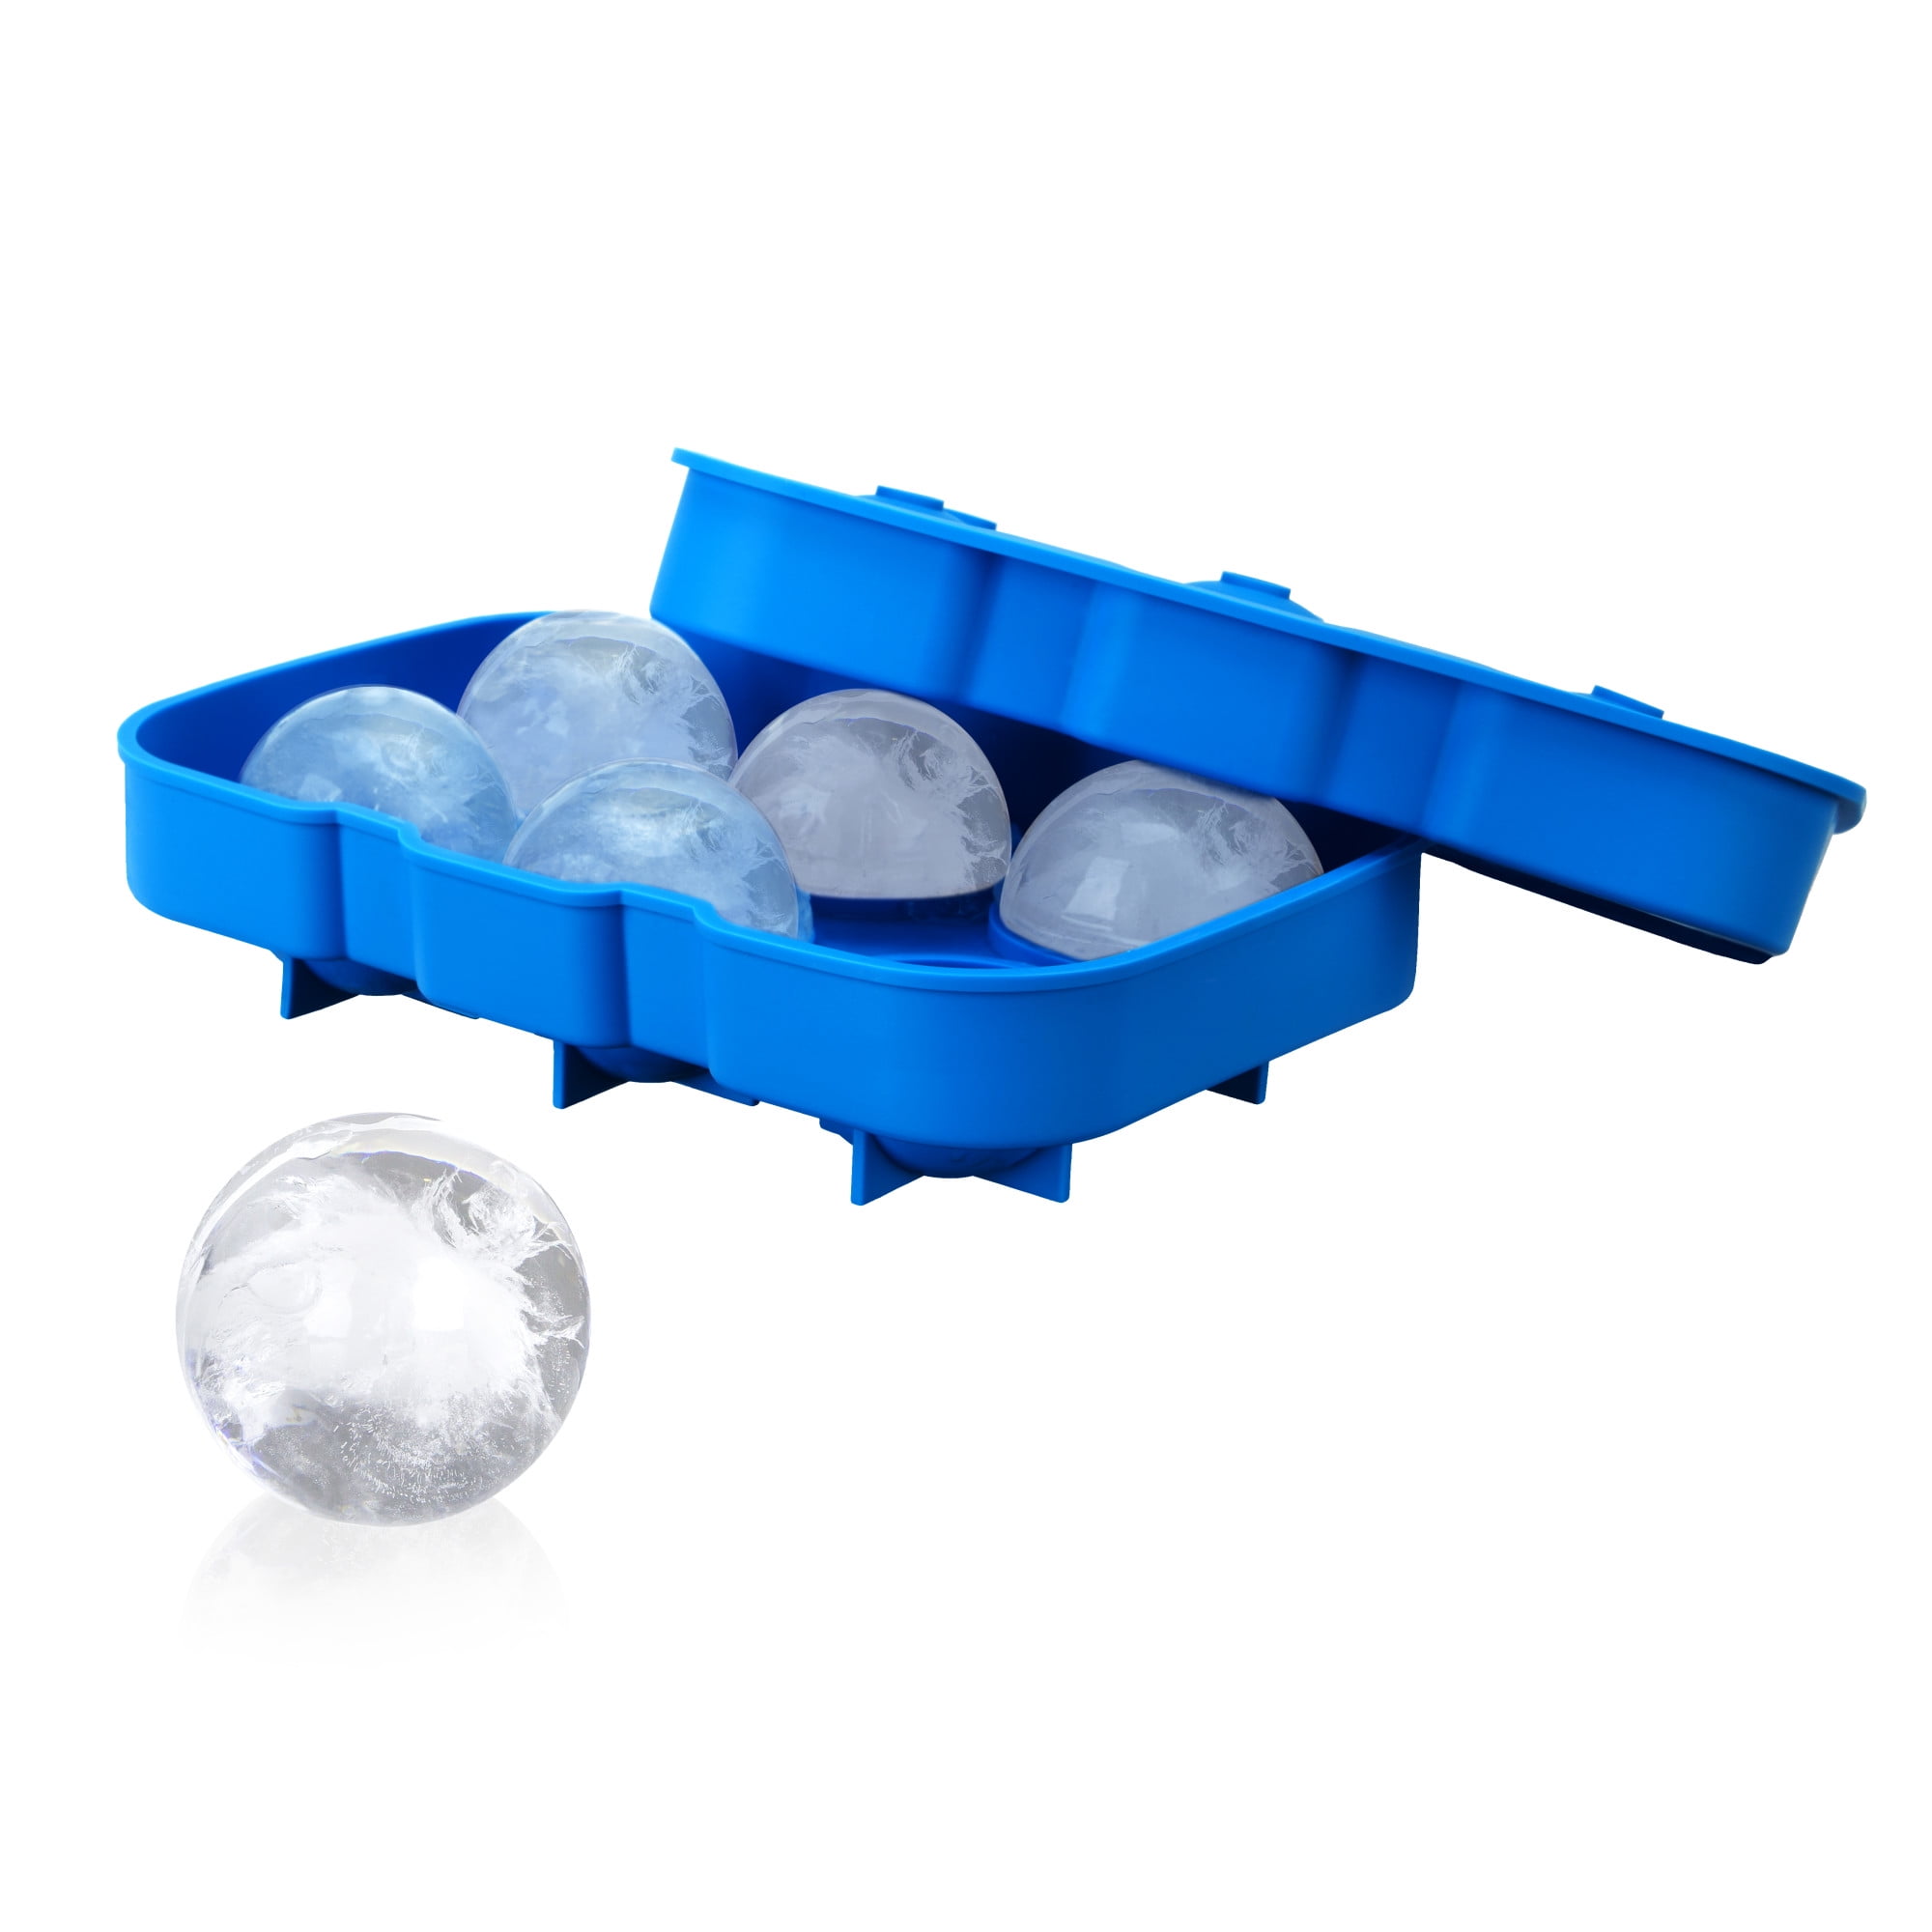  True Zoo Baseball Ice Mold, Silicone Ice Sphere Mold, Novelty  Ice Maker, Set of 1, White, Dishwasher Safe, Ice Cube Tray: Home & Kitchen